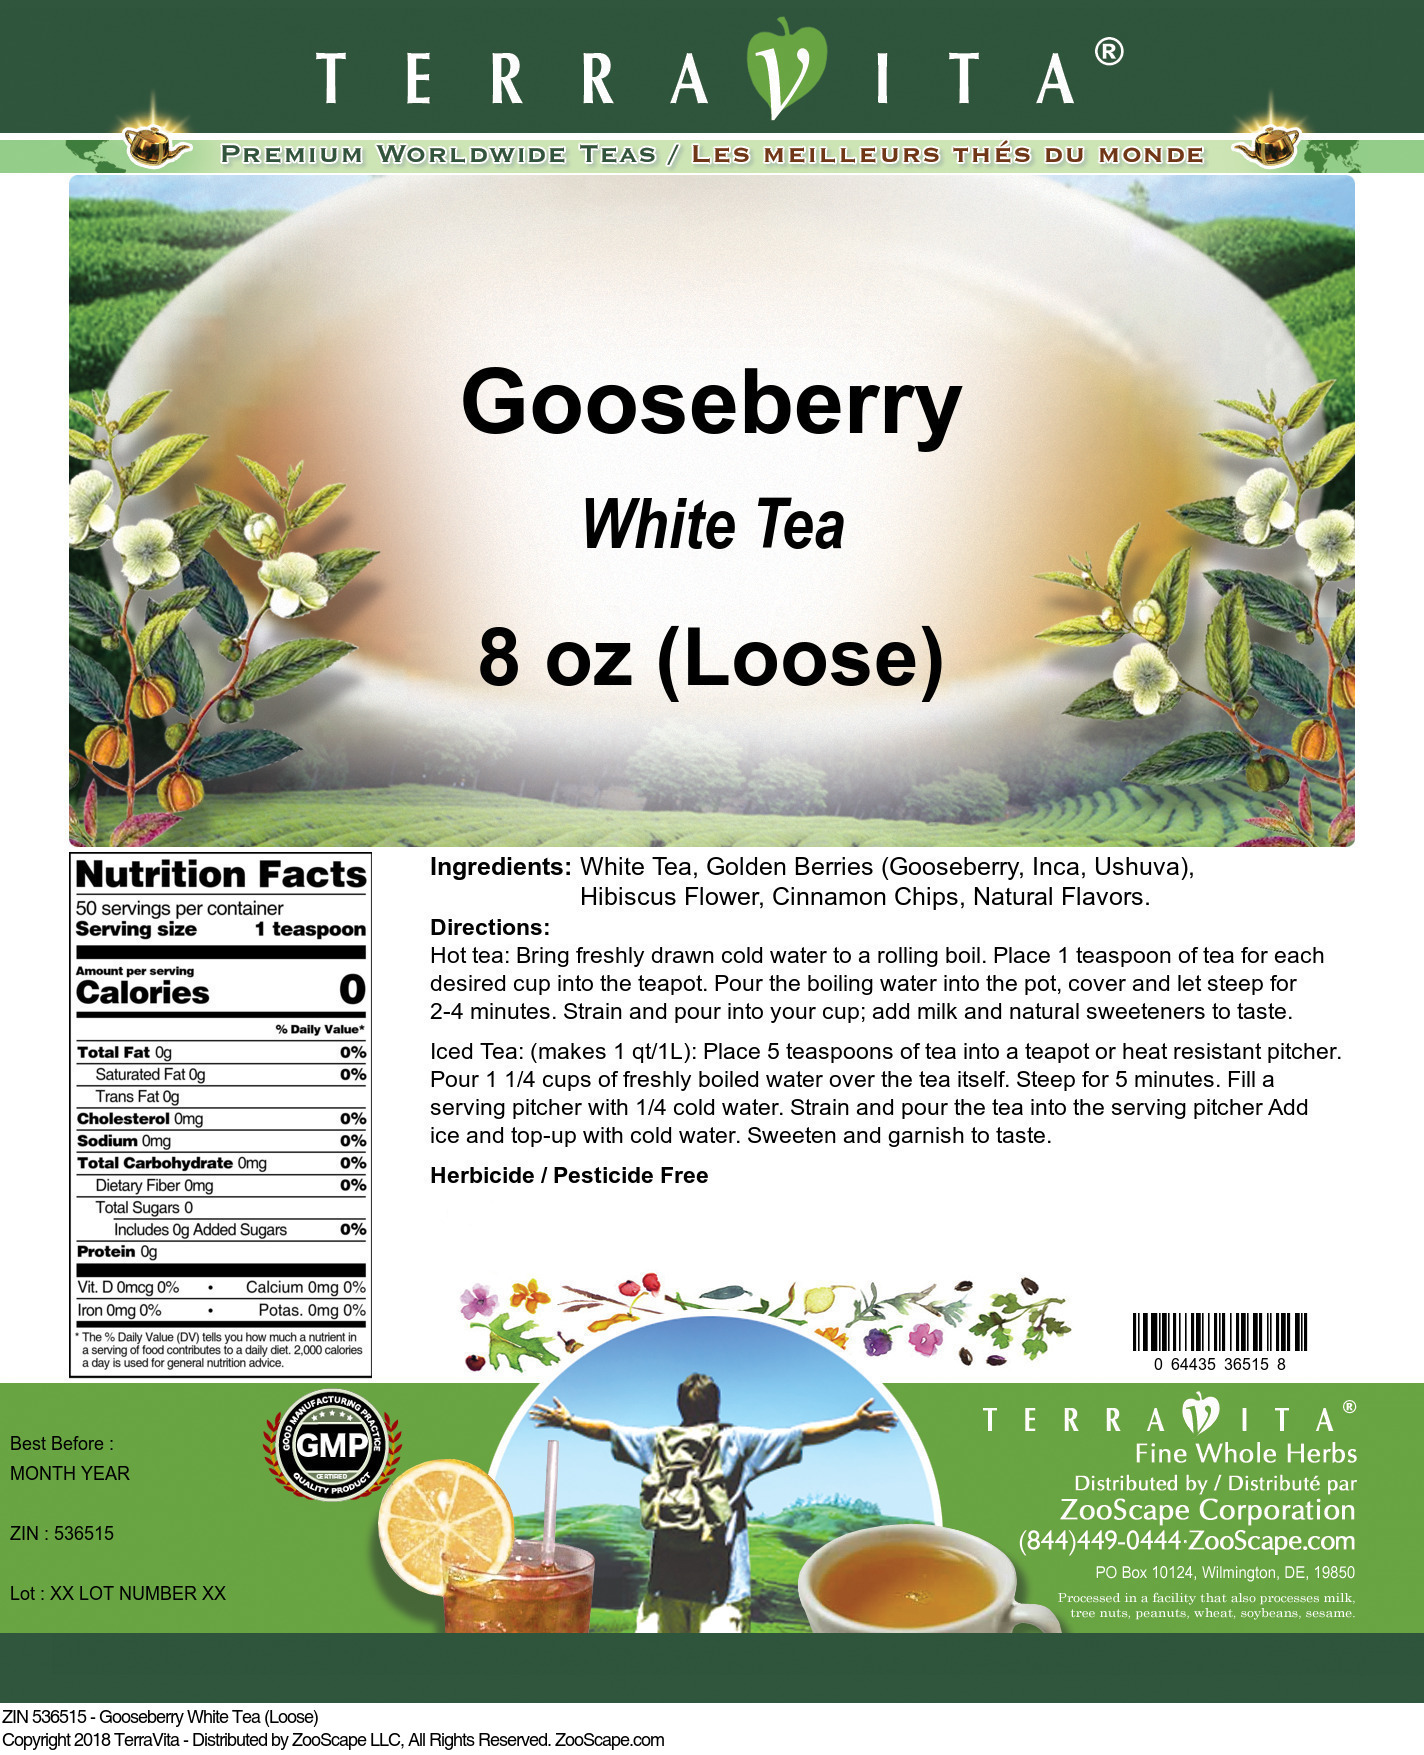 Gooseberry White Tea (Loose) - Label